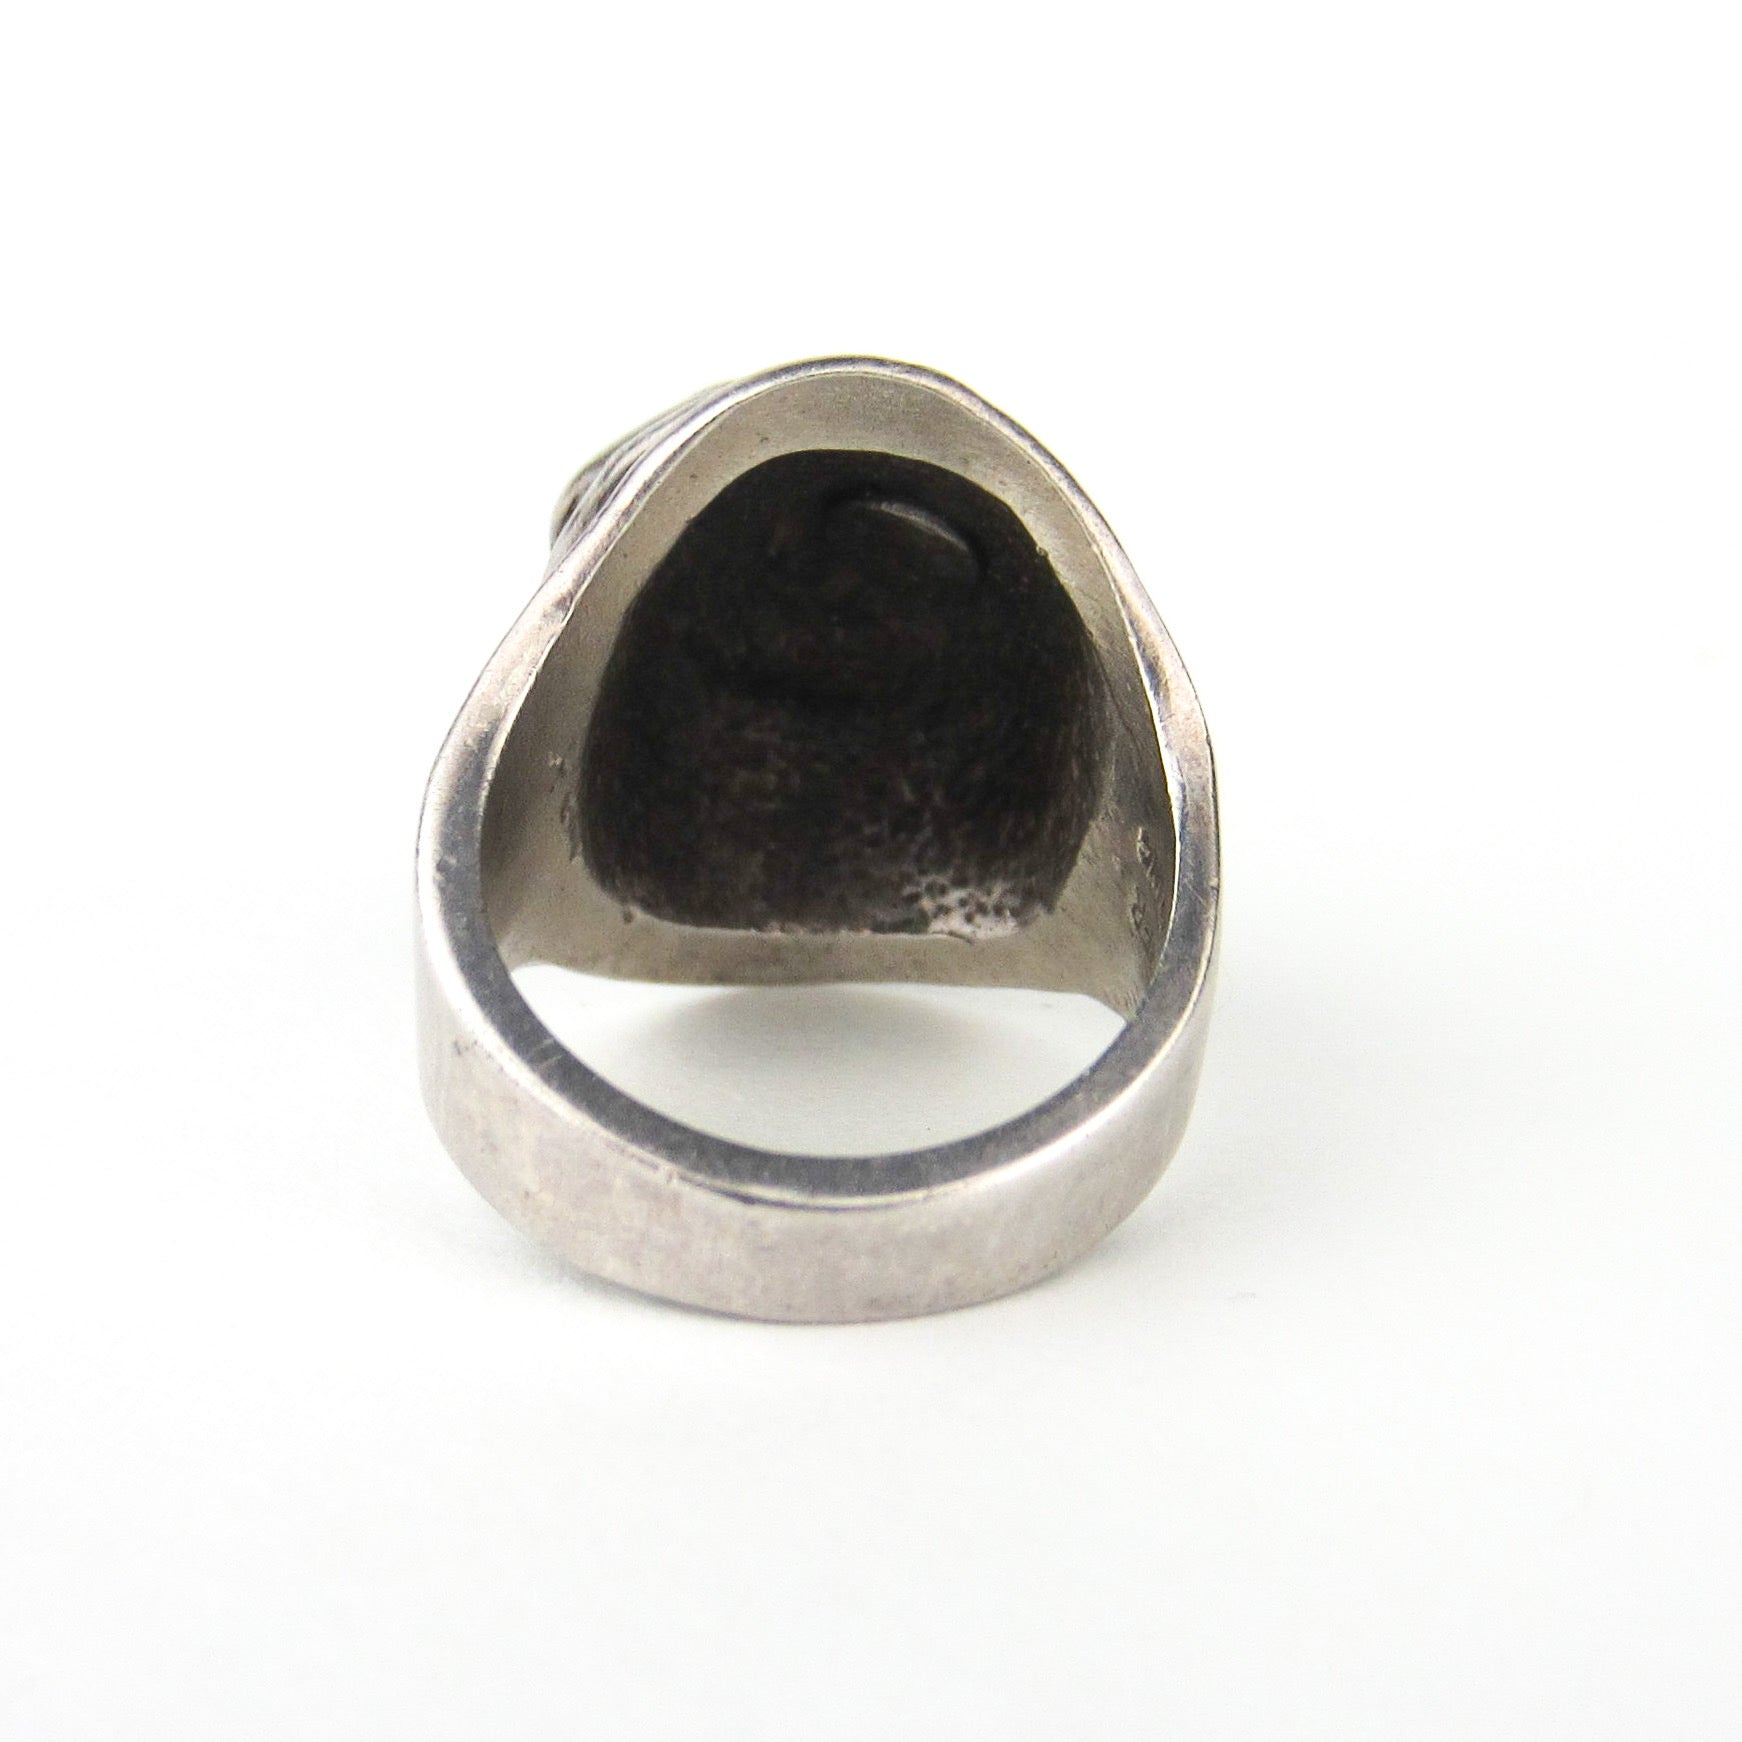 SOLD--Modernist Ridged Cone Ring Sterling Silver, Pauline Rader c. 196 ...